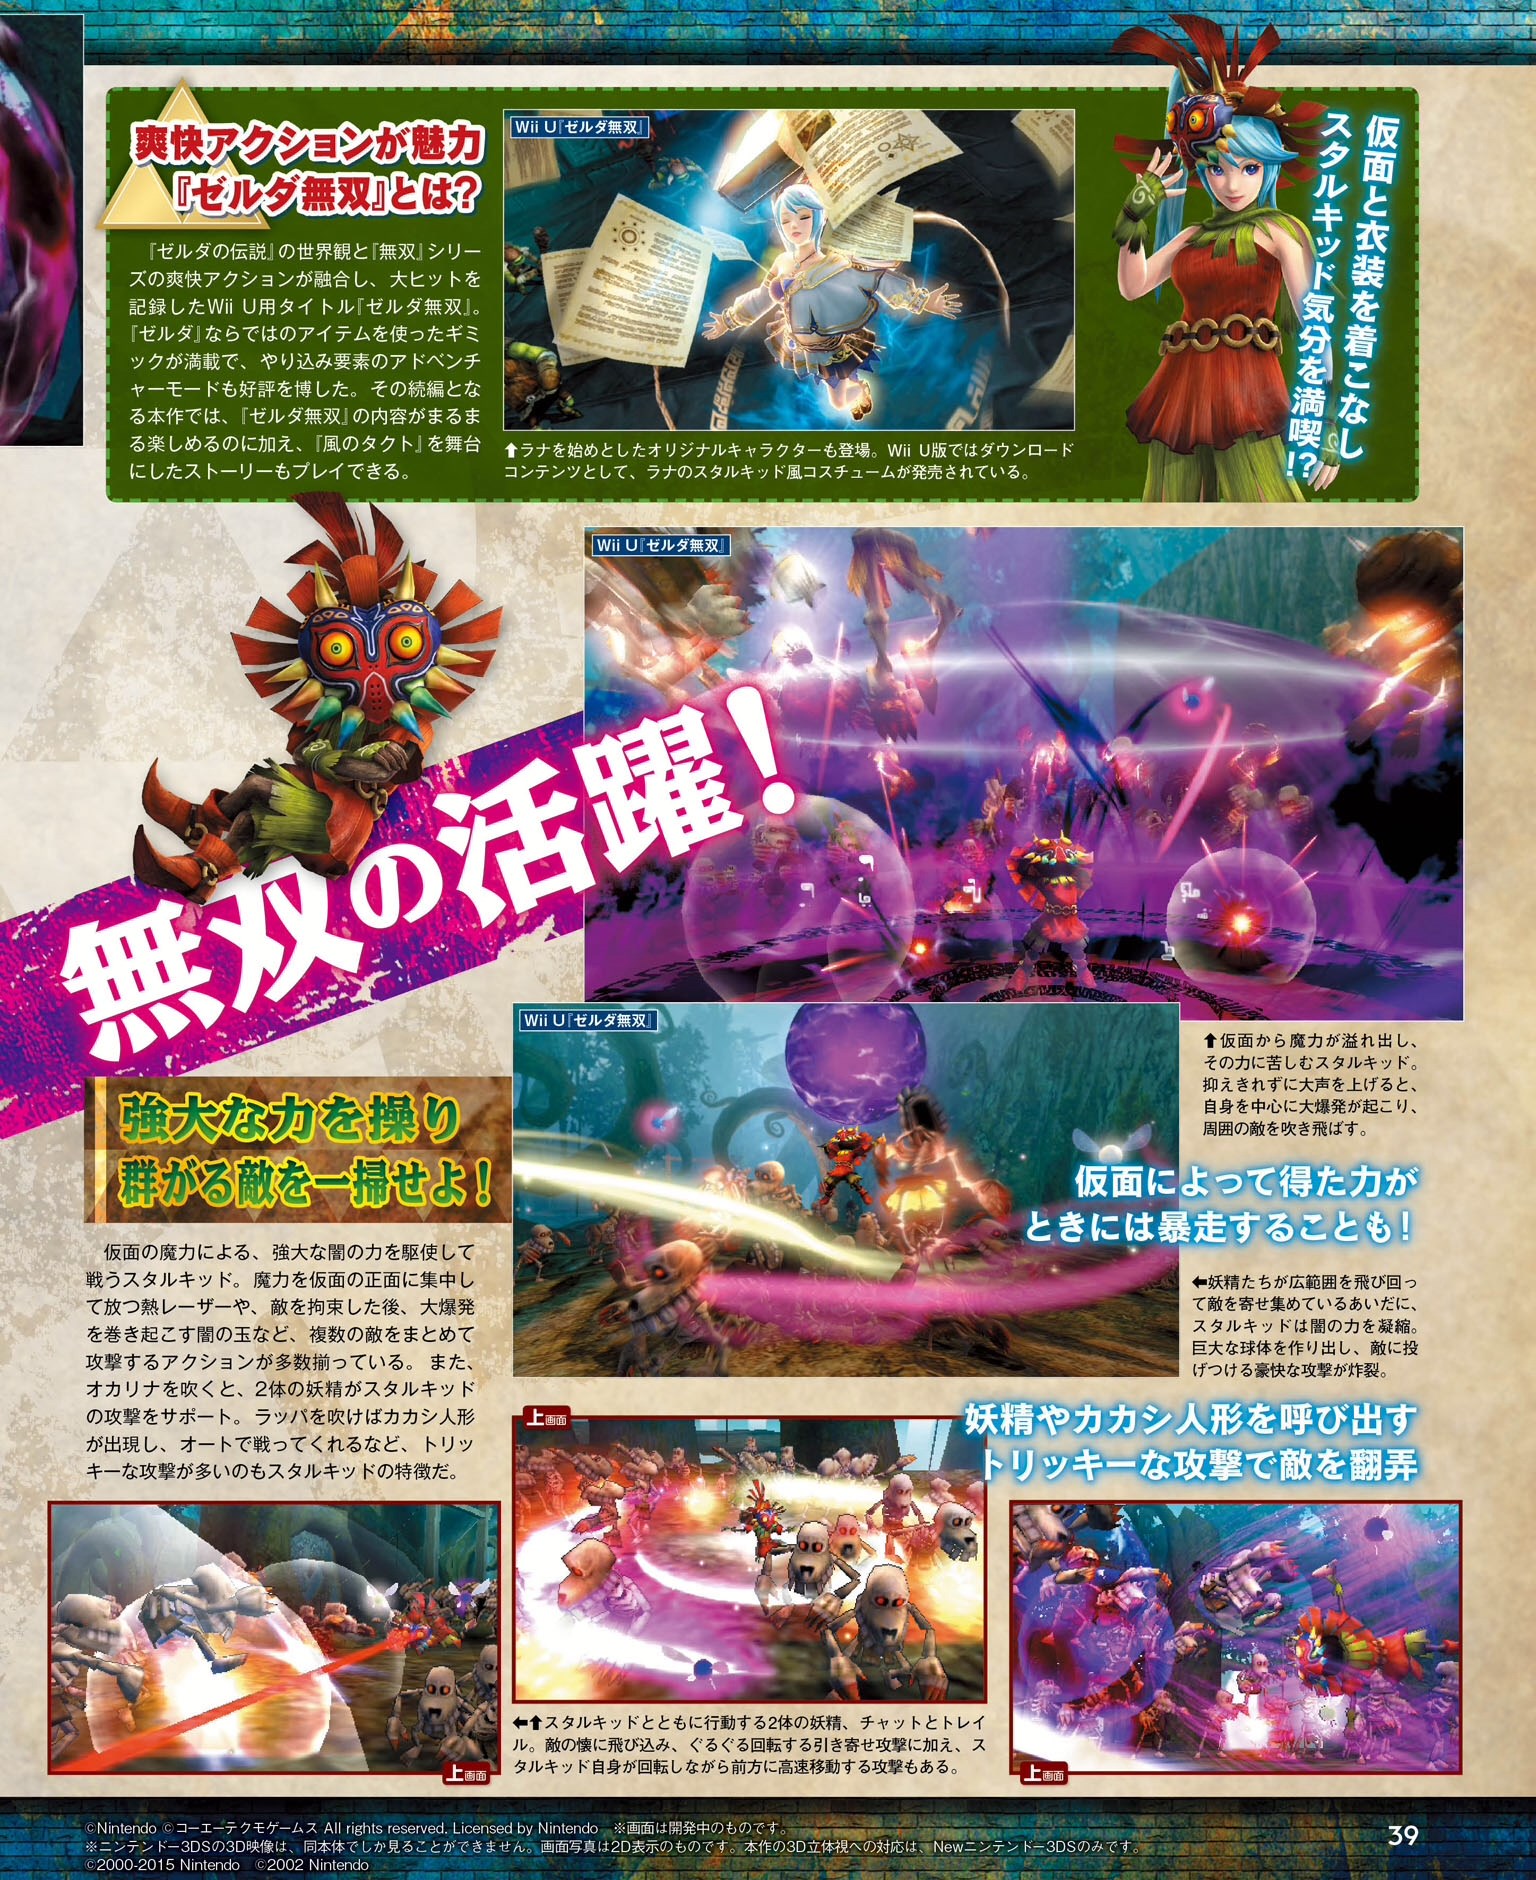 New Famitsu Magazine Scans Reveal More Hyrule Warriors Dlc Content Zelda Dungeon